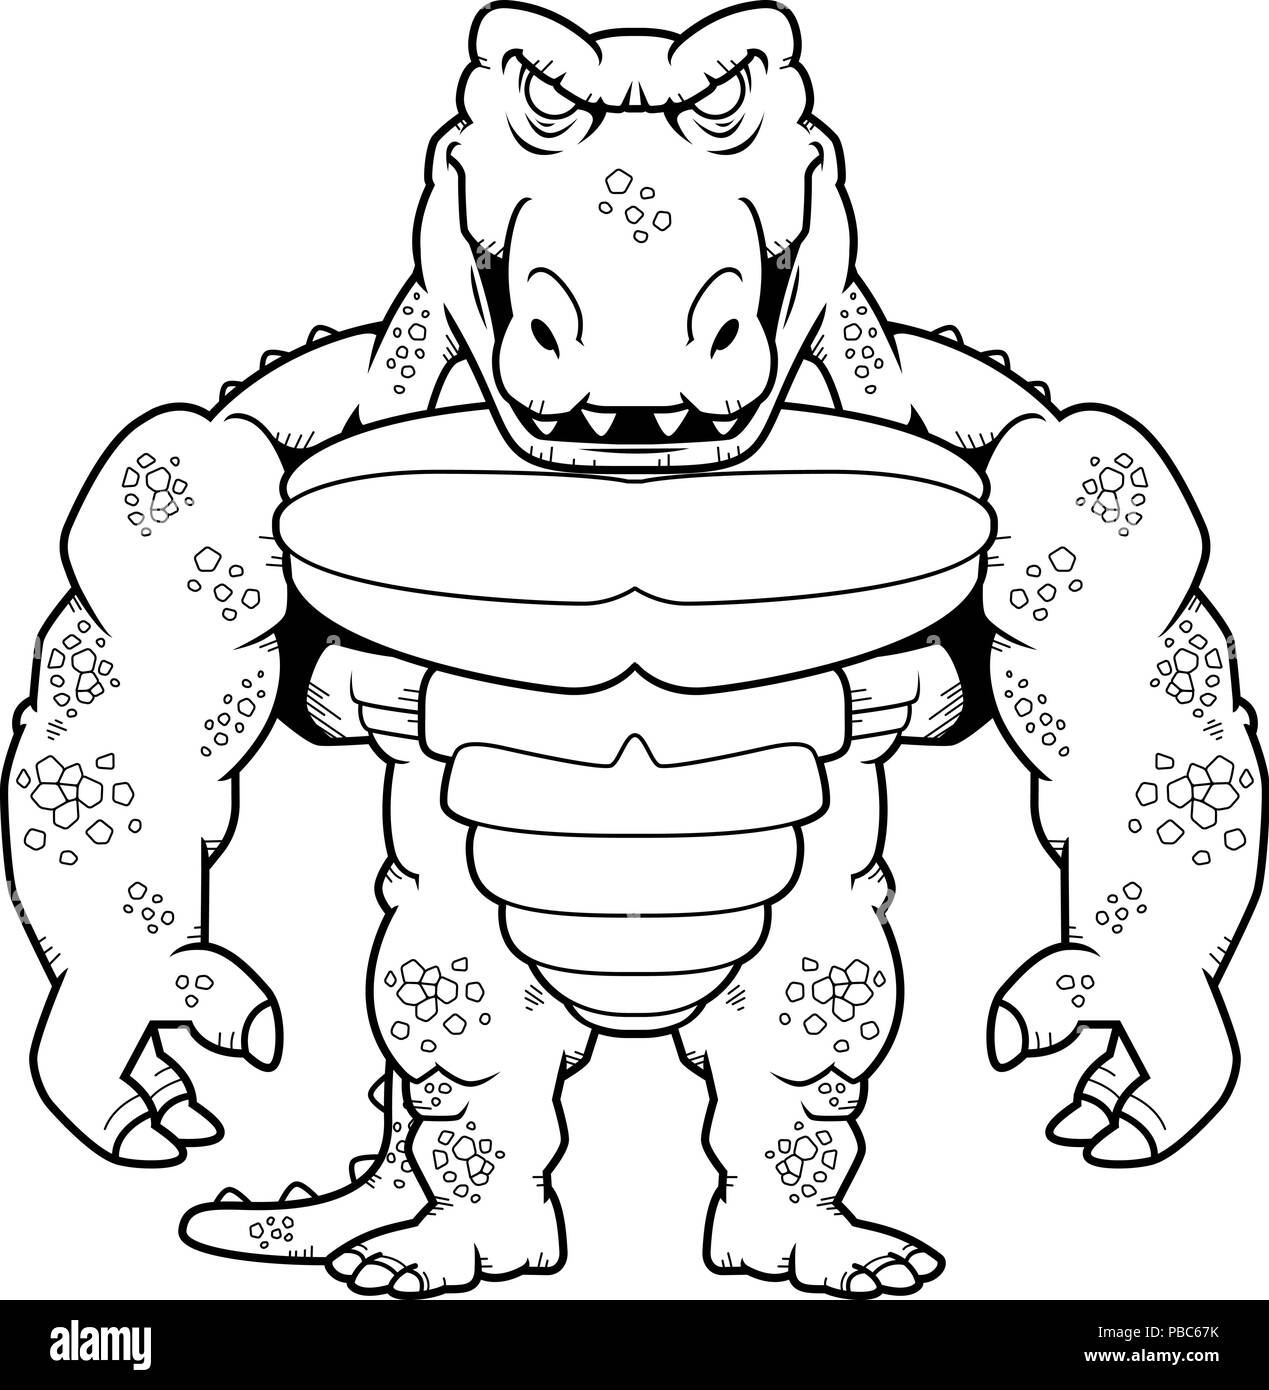 A cartoon illustration of a crocodile monster man. Stock Vector